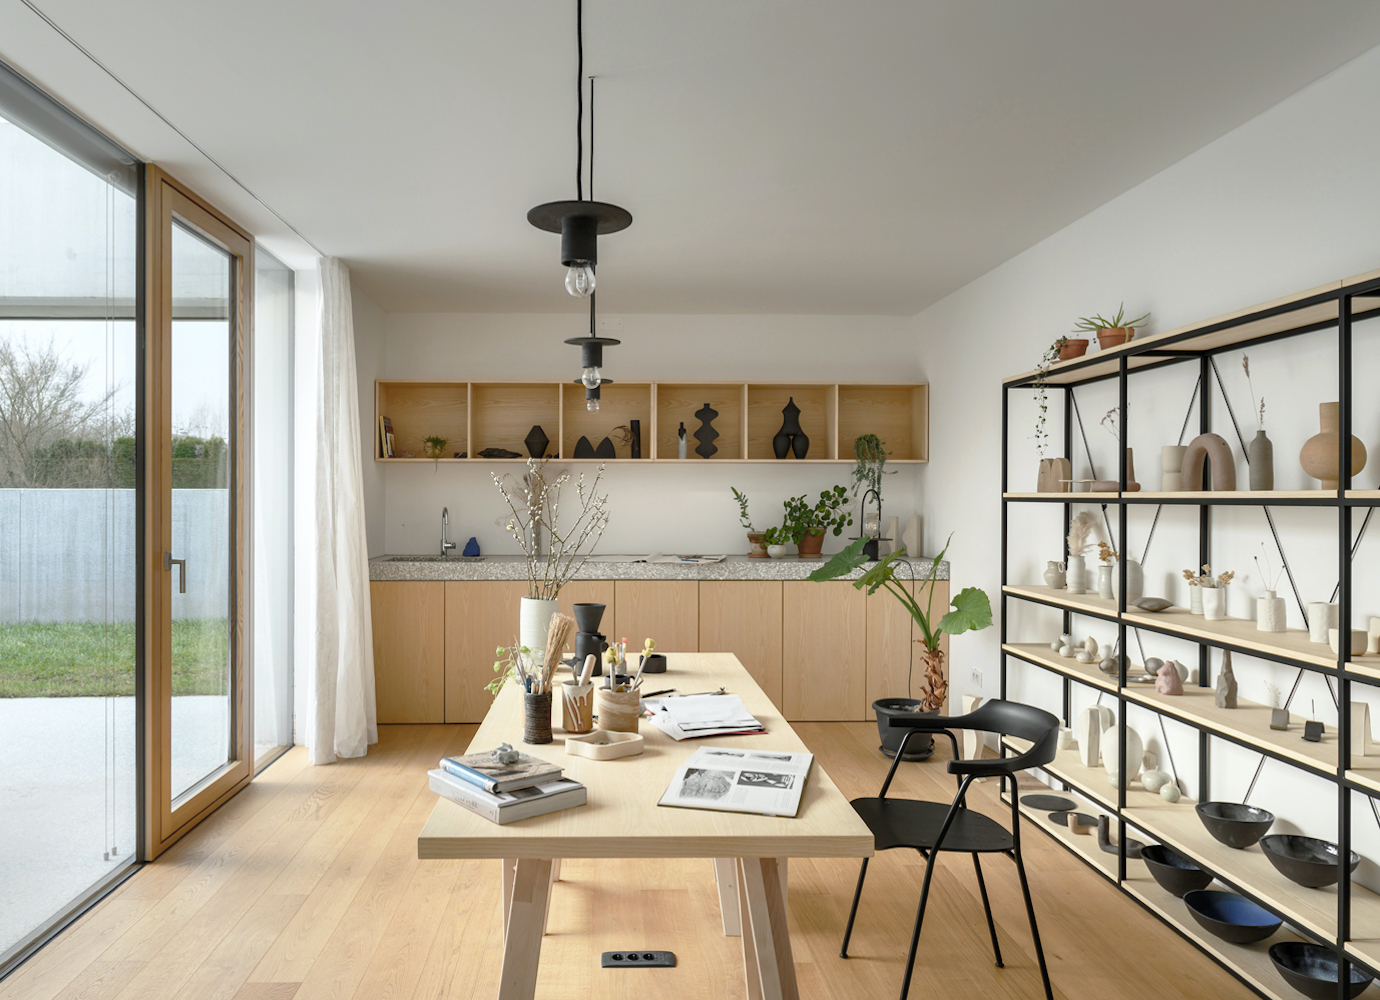 Slovenian architecture studio unveils its vision of an artist’s dream house